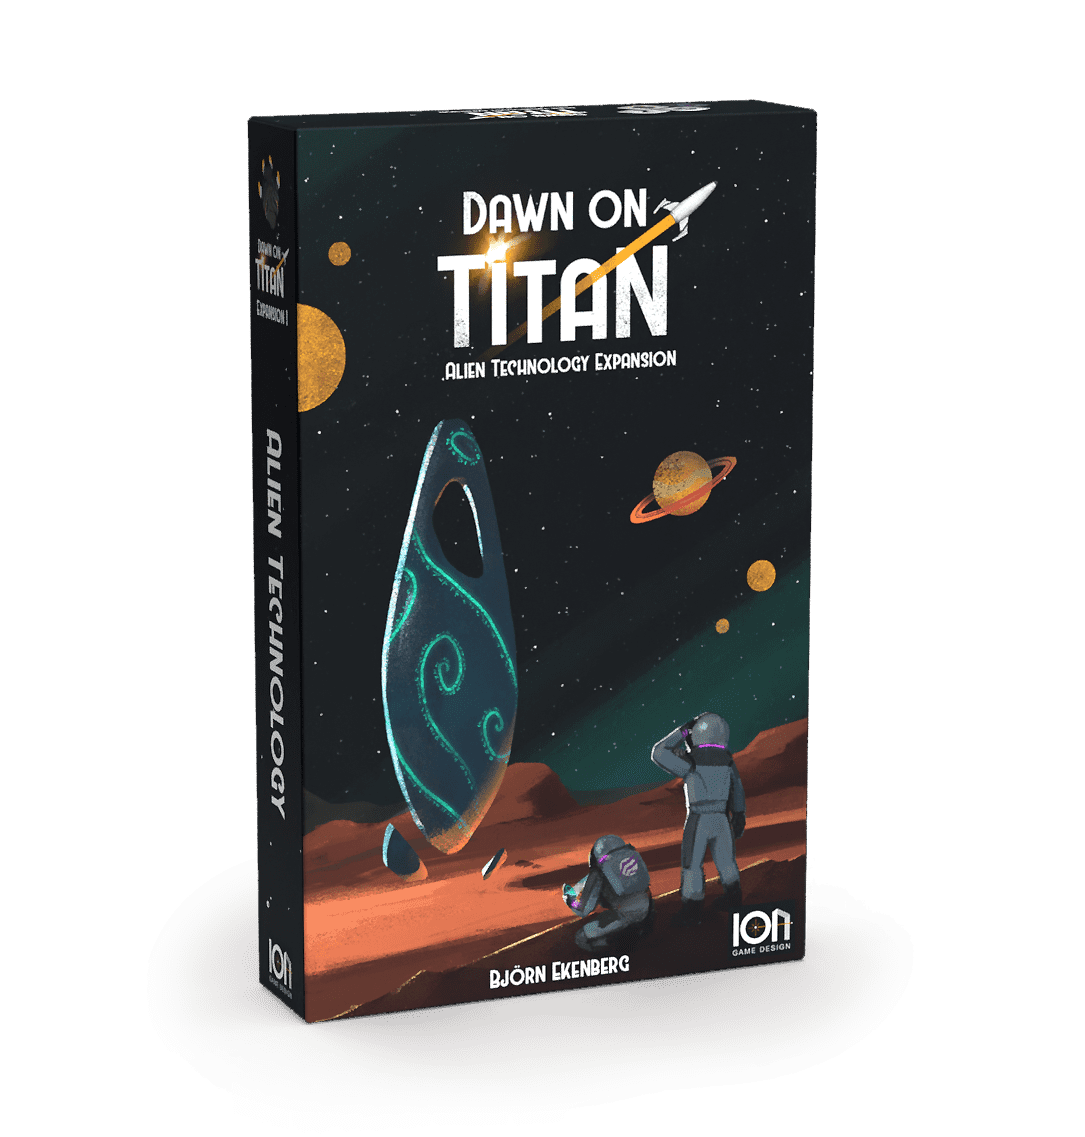 Dawn on Titan Alien Game Expansion Pack - 3D box cover illustration